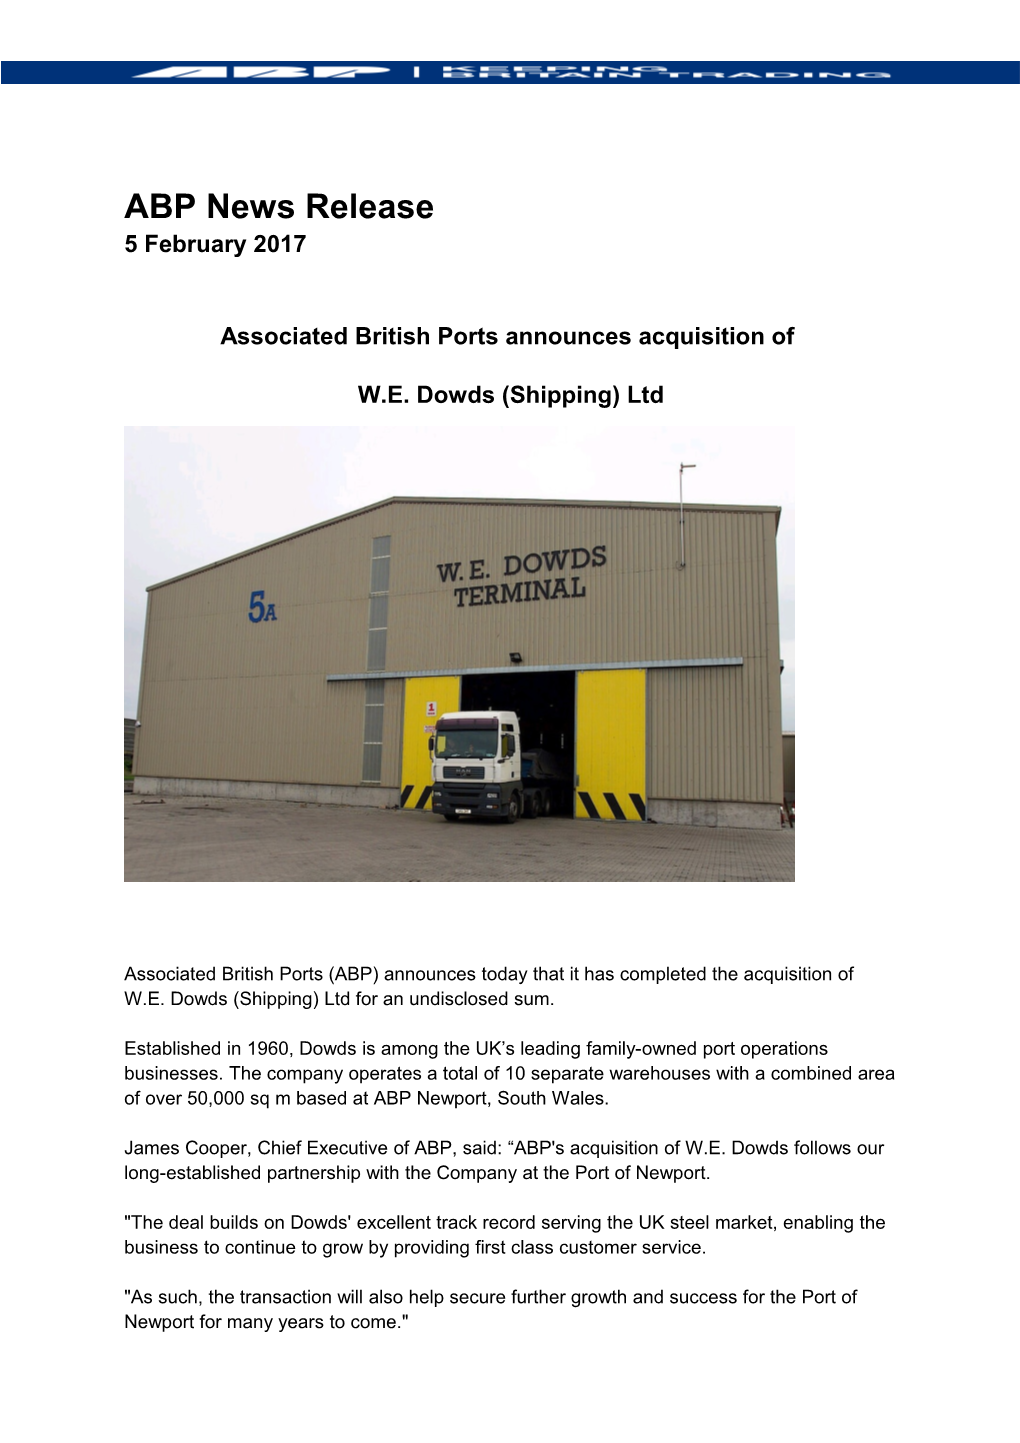 Associated British Ports Announces Acquisition Of